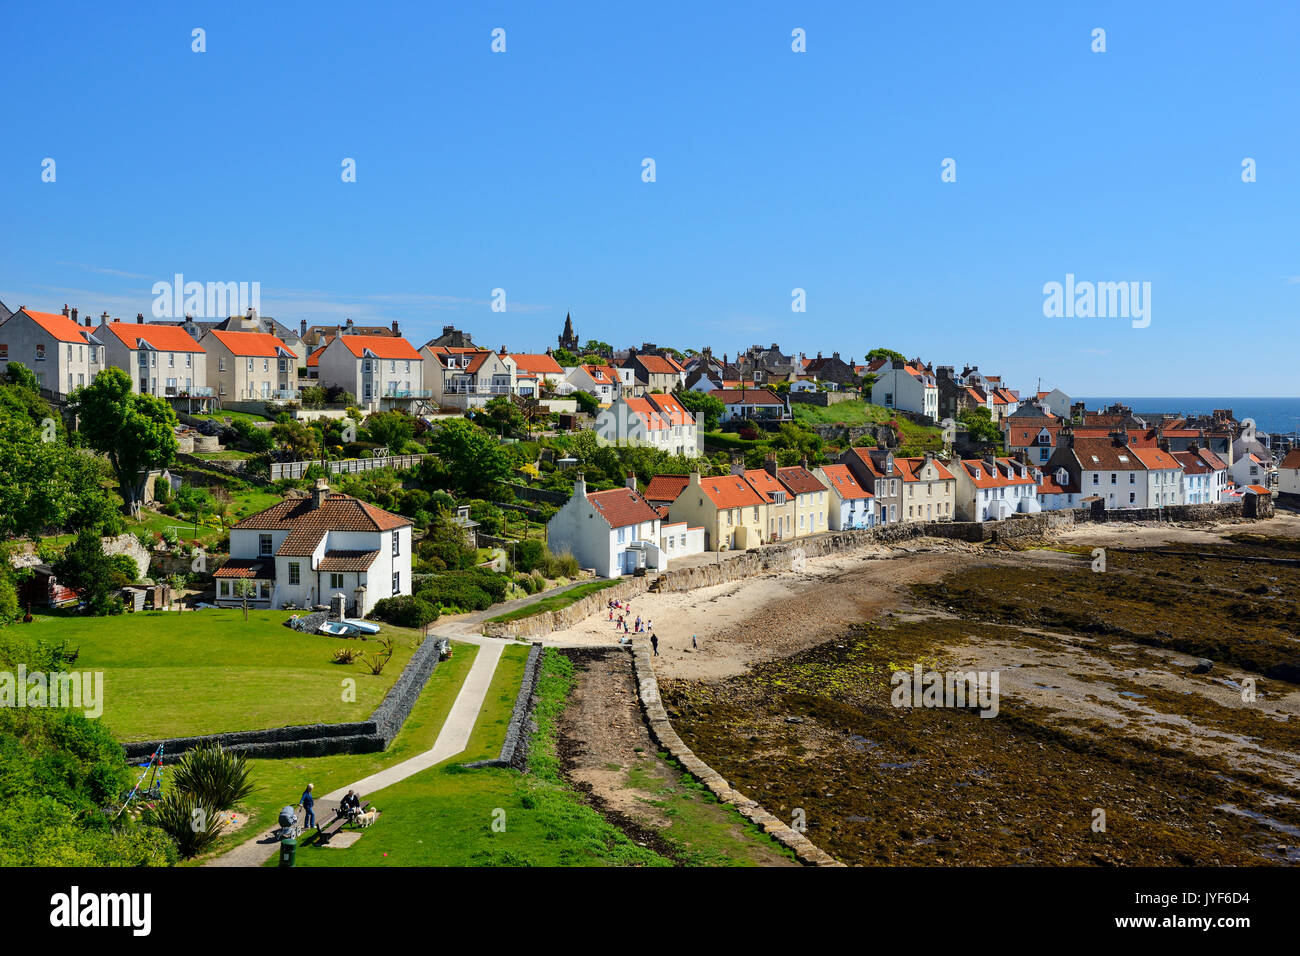 Picturesque Scottish coastal town of Pittenweem in East Neuk of Fife, Scotland, UK Stock Photo